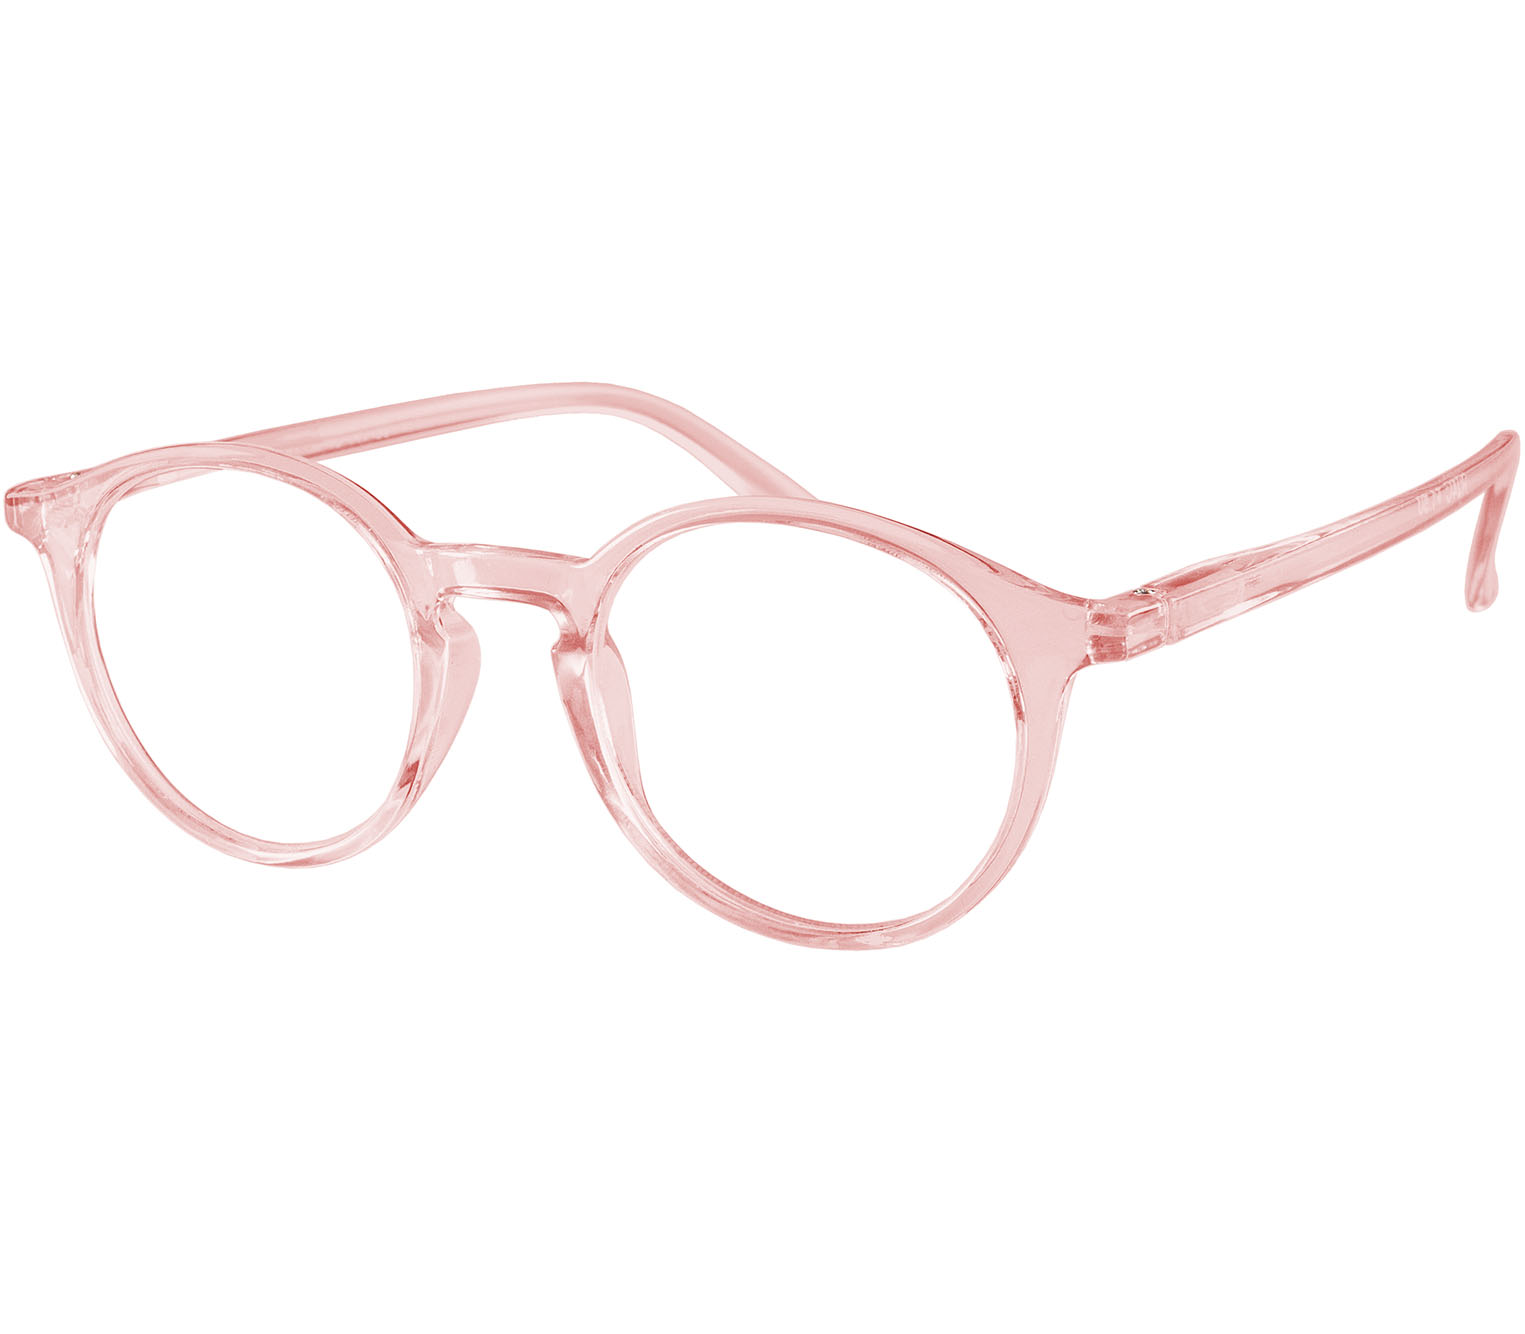 Main Image (Angle) - Oskar (Pink) Reading Glasses